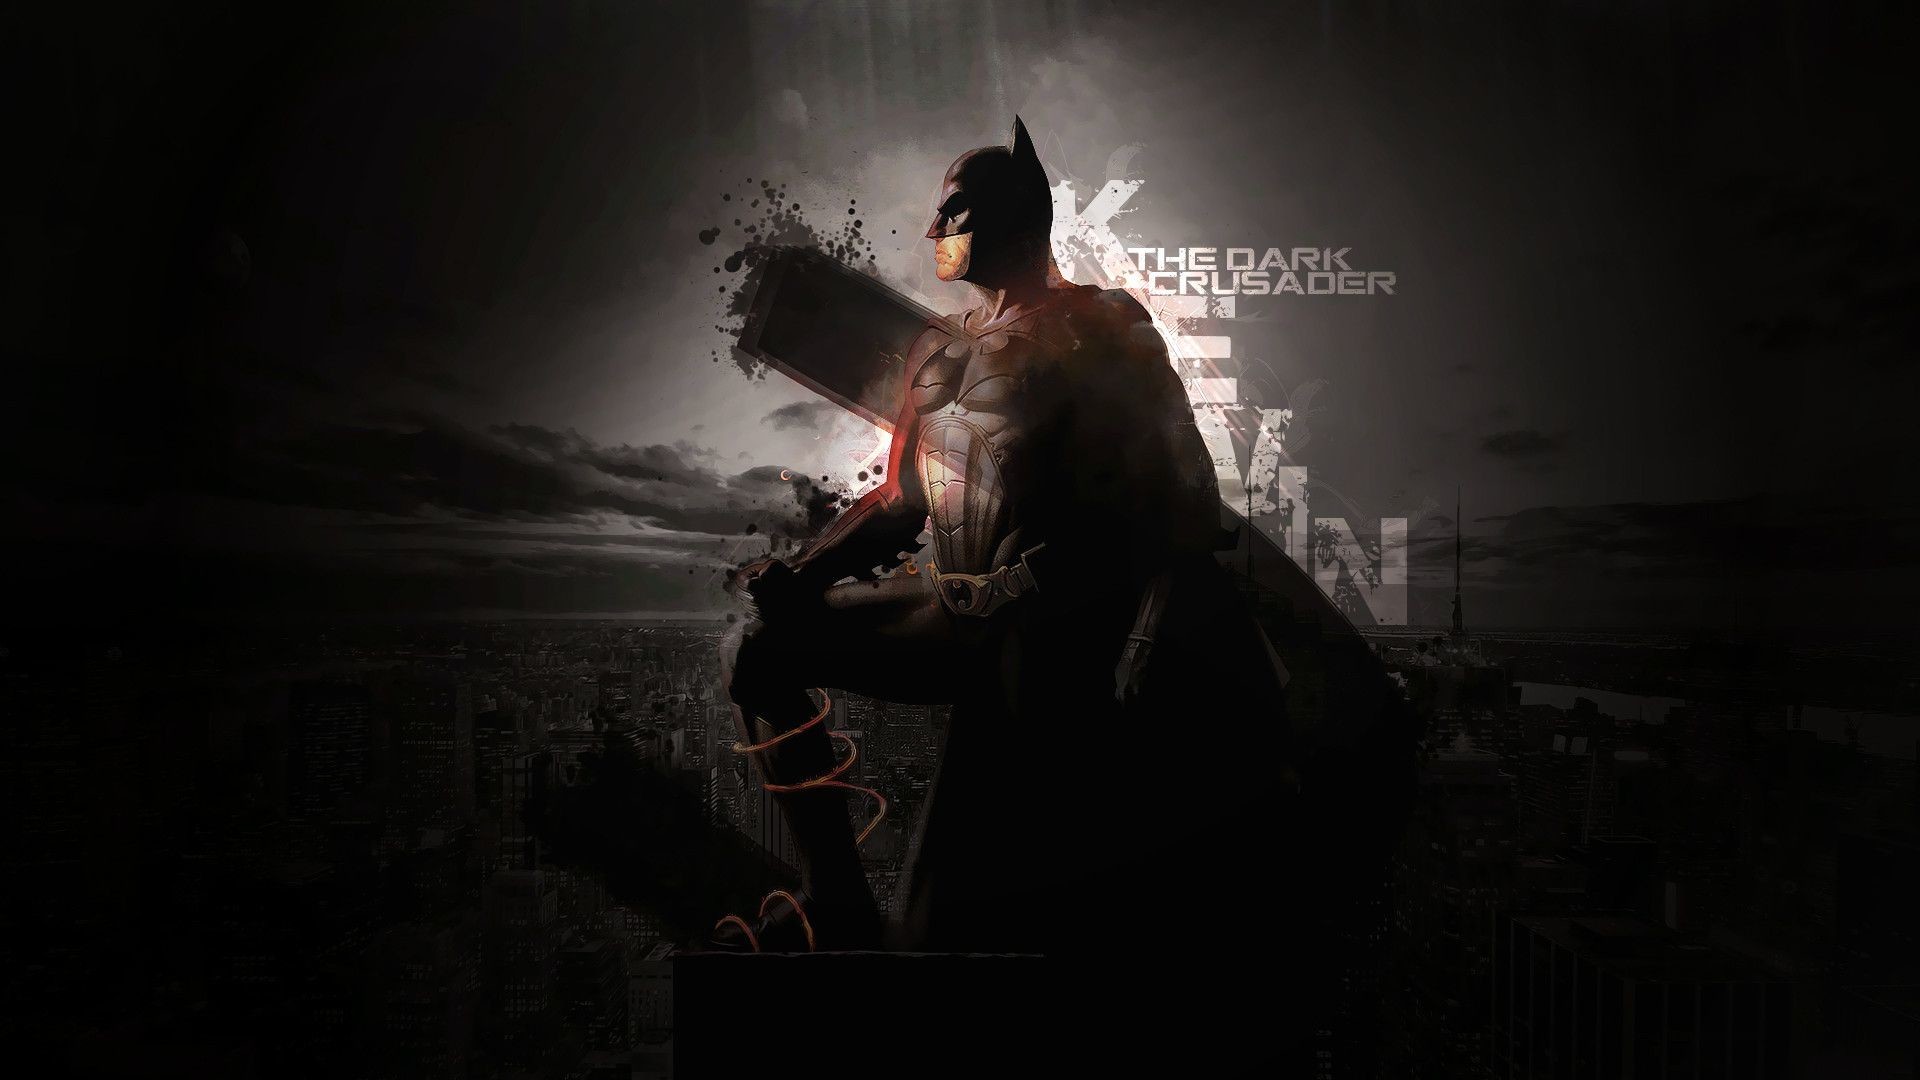 Batman Wallpaper HD download free